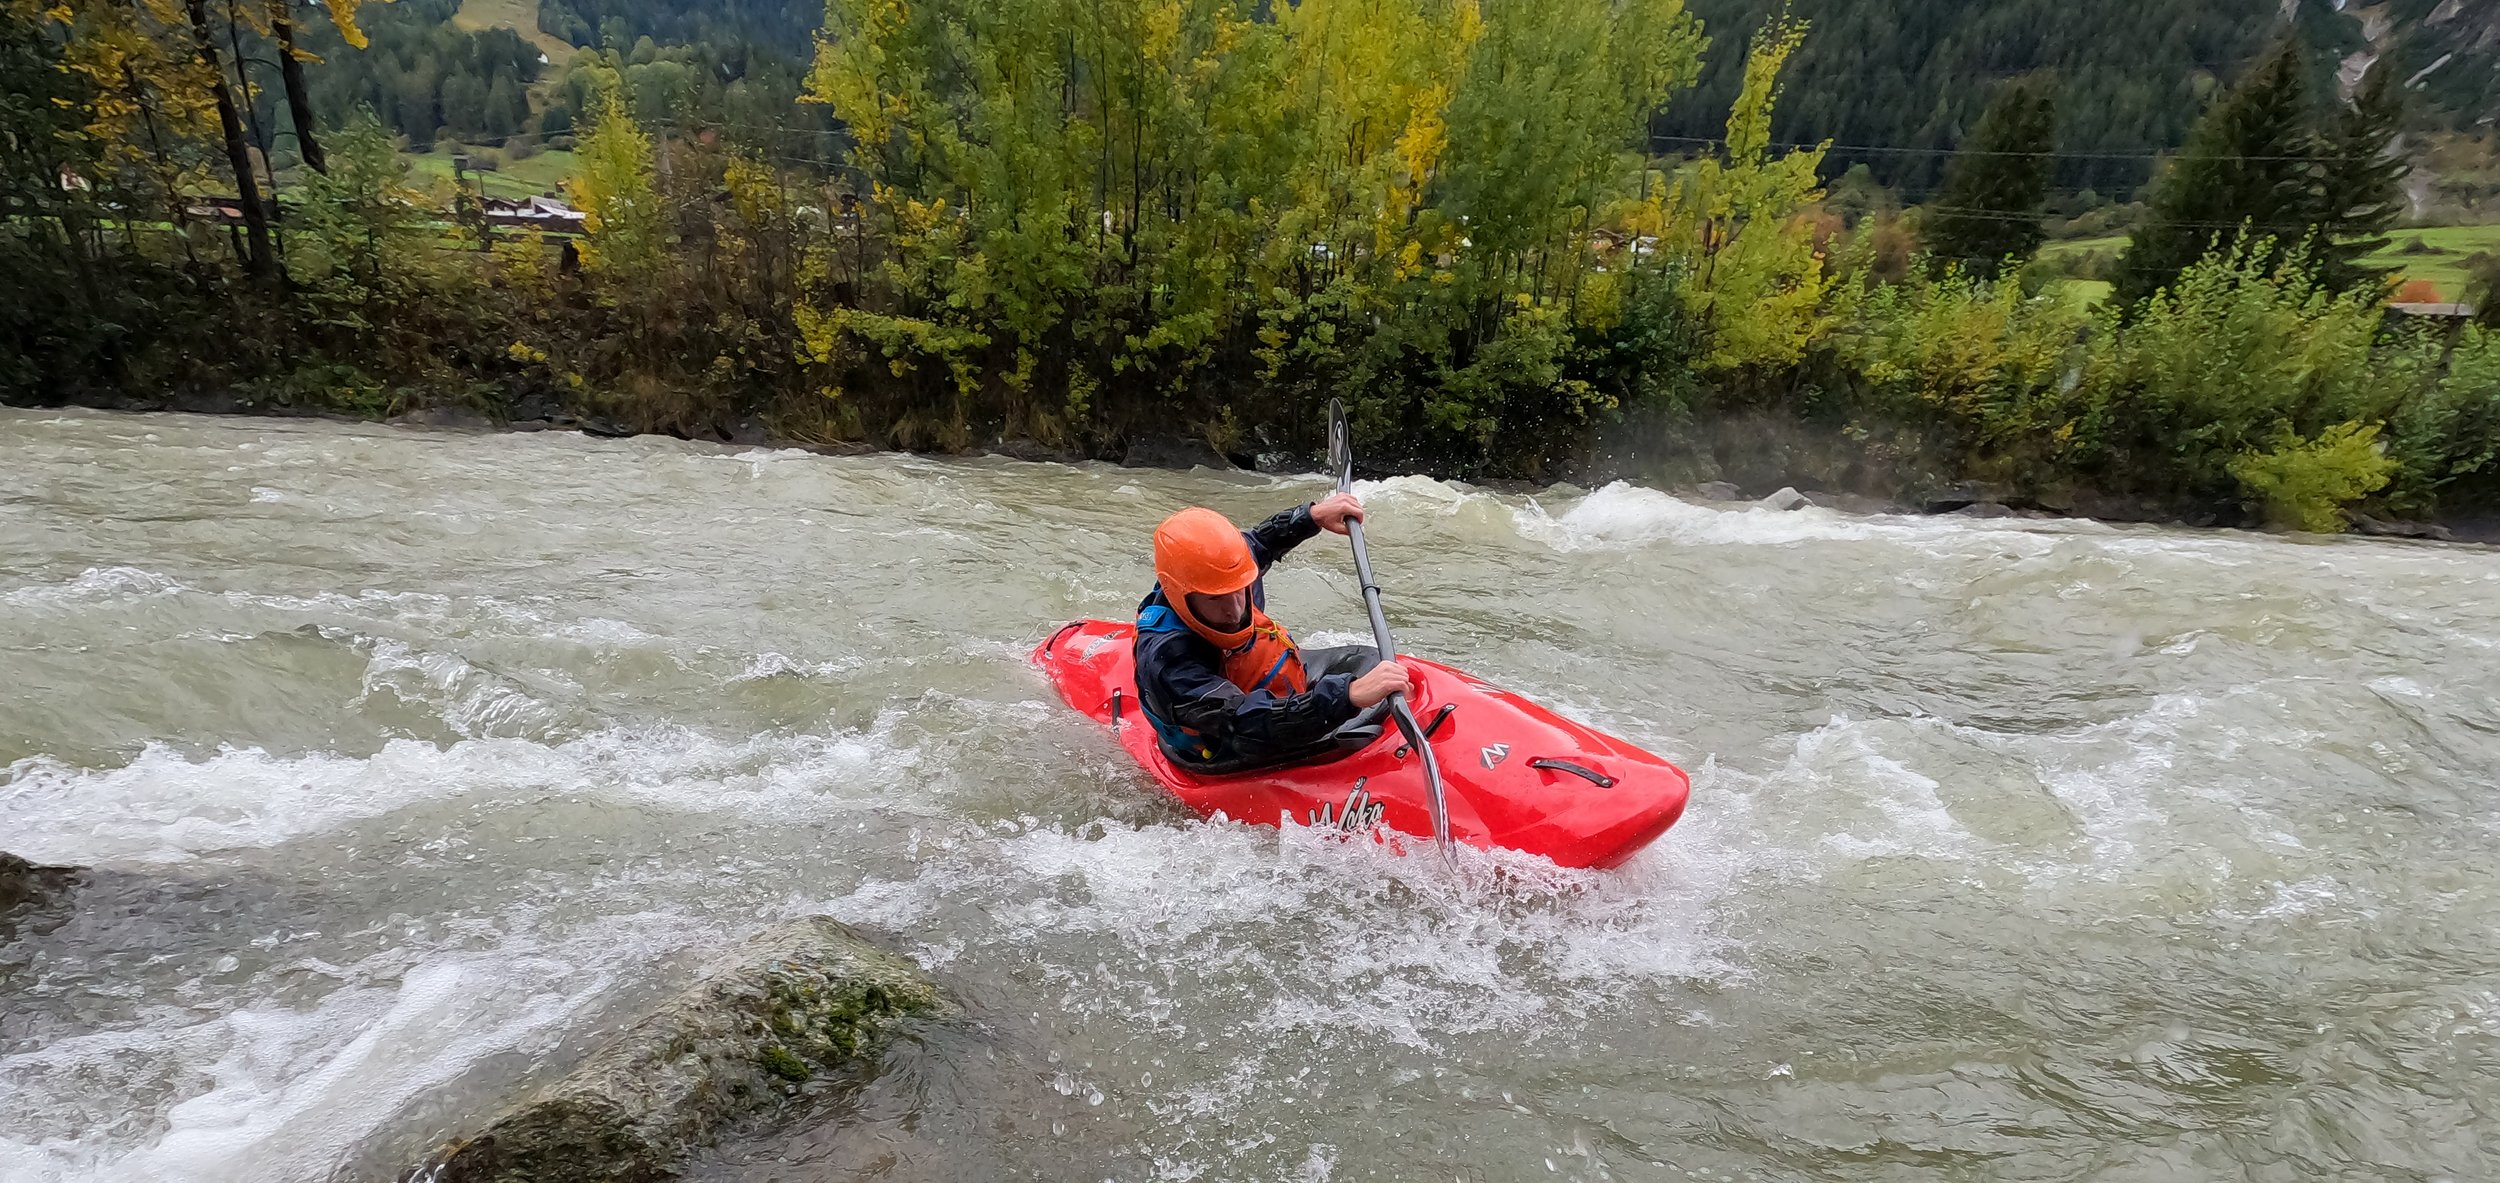 Kayaking Courses on River Rosanna in Austria